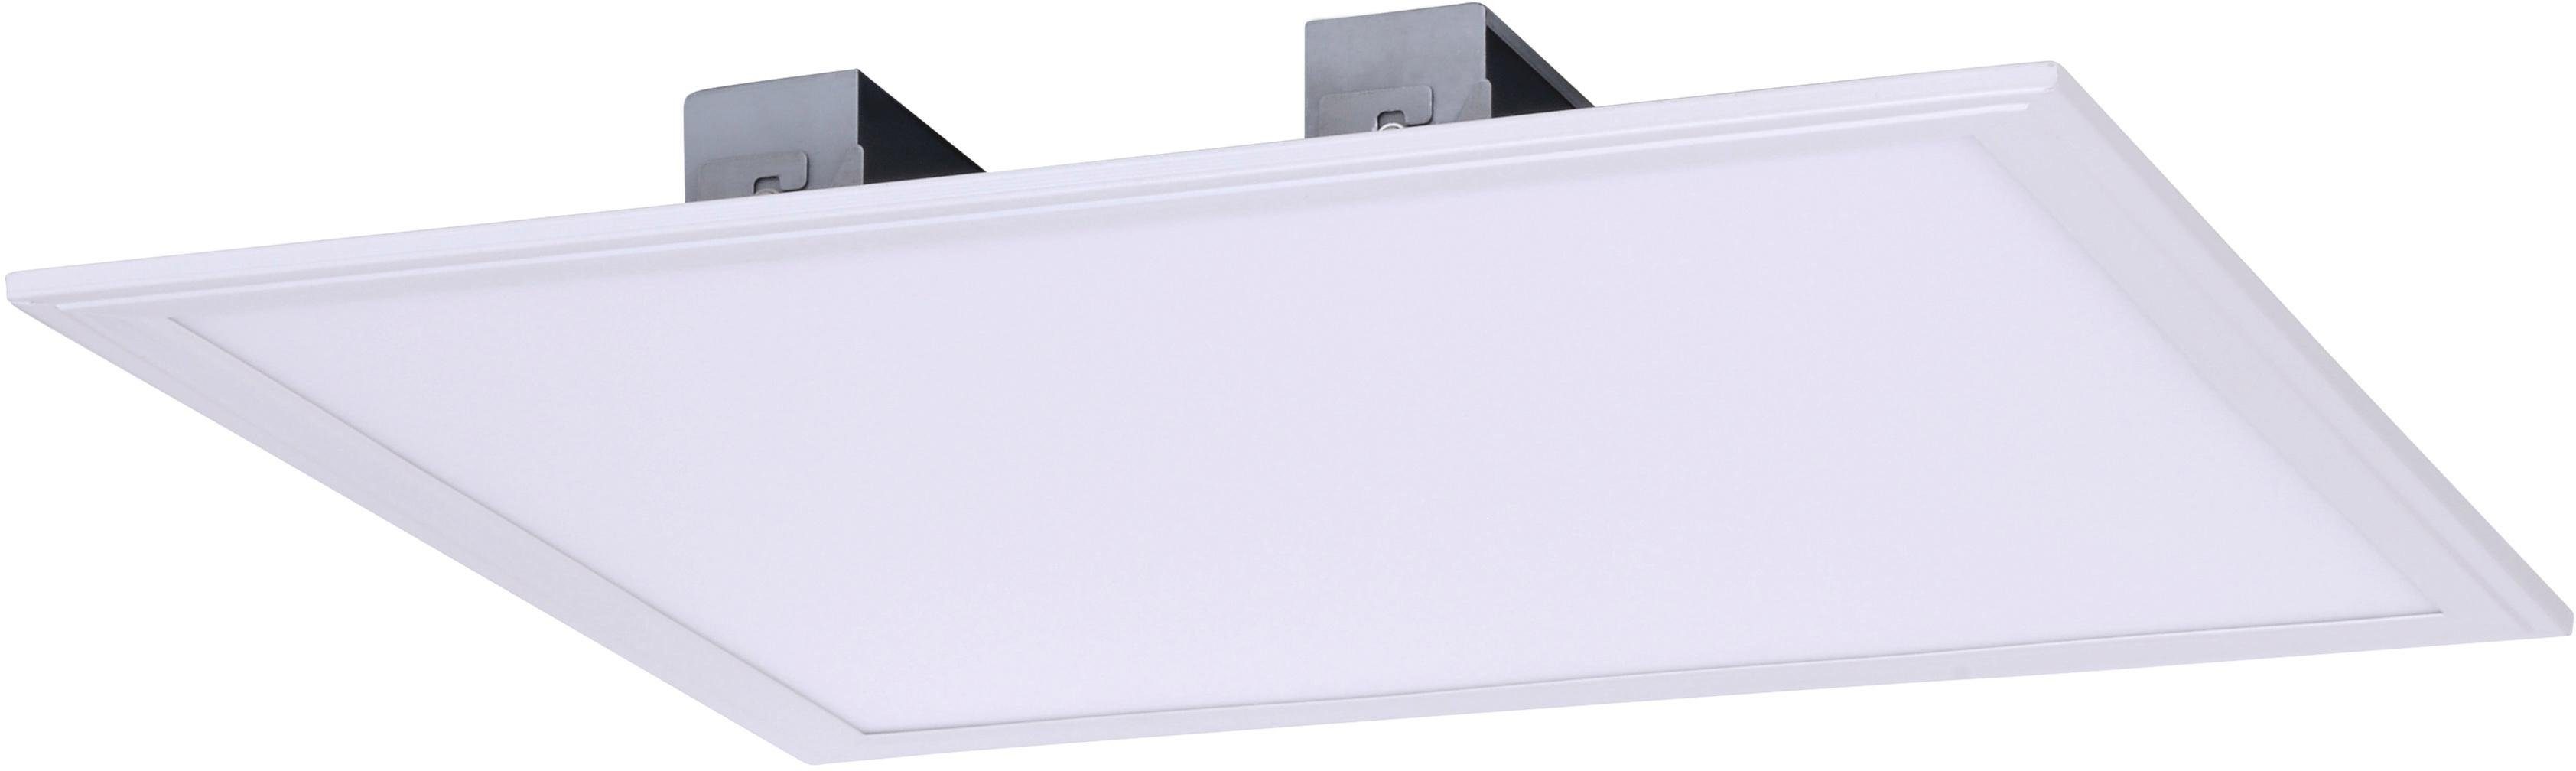 näve LED Panel PANEL, LED fest integriert, Neutralweiß, LED Aufbaupanel, incl. Treiber, Energieeffizienz: F, weiß | Panels